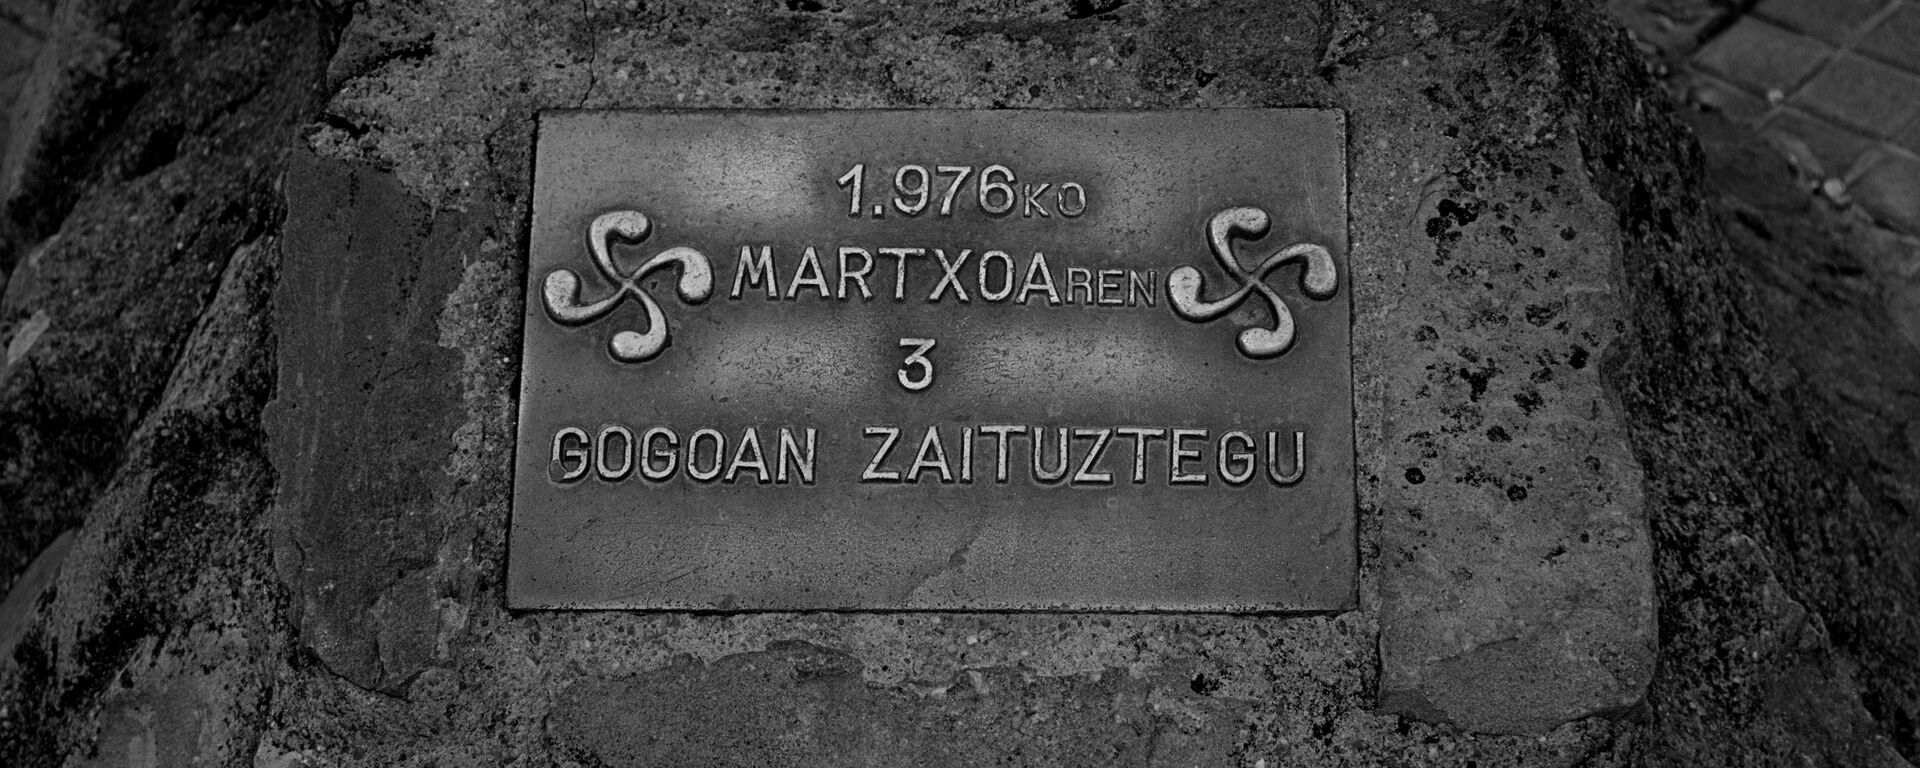 Placa en homenaje a la huelga del 3 de marzo de 1976 en Vitoria (Álava). - Sputnik Mundo, 1920, 03.03.2020